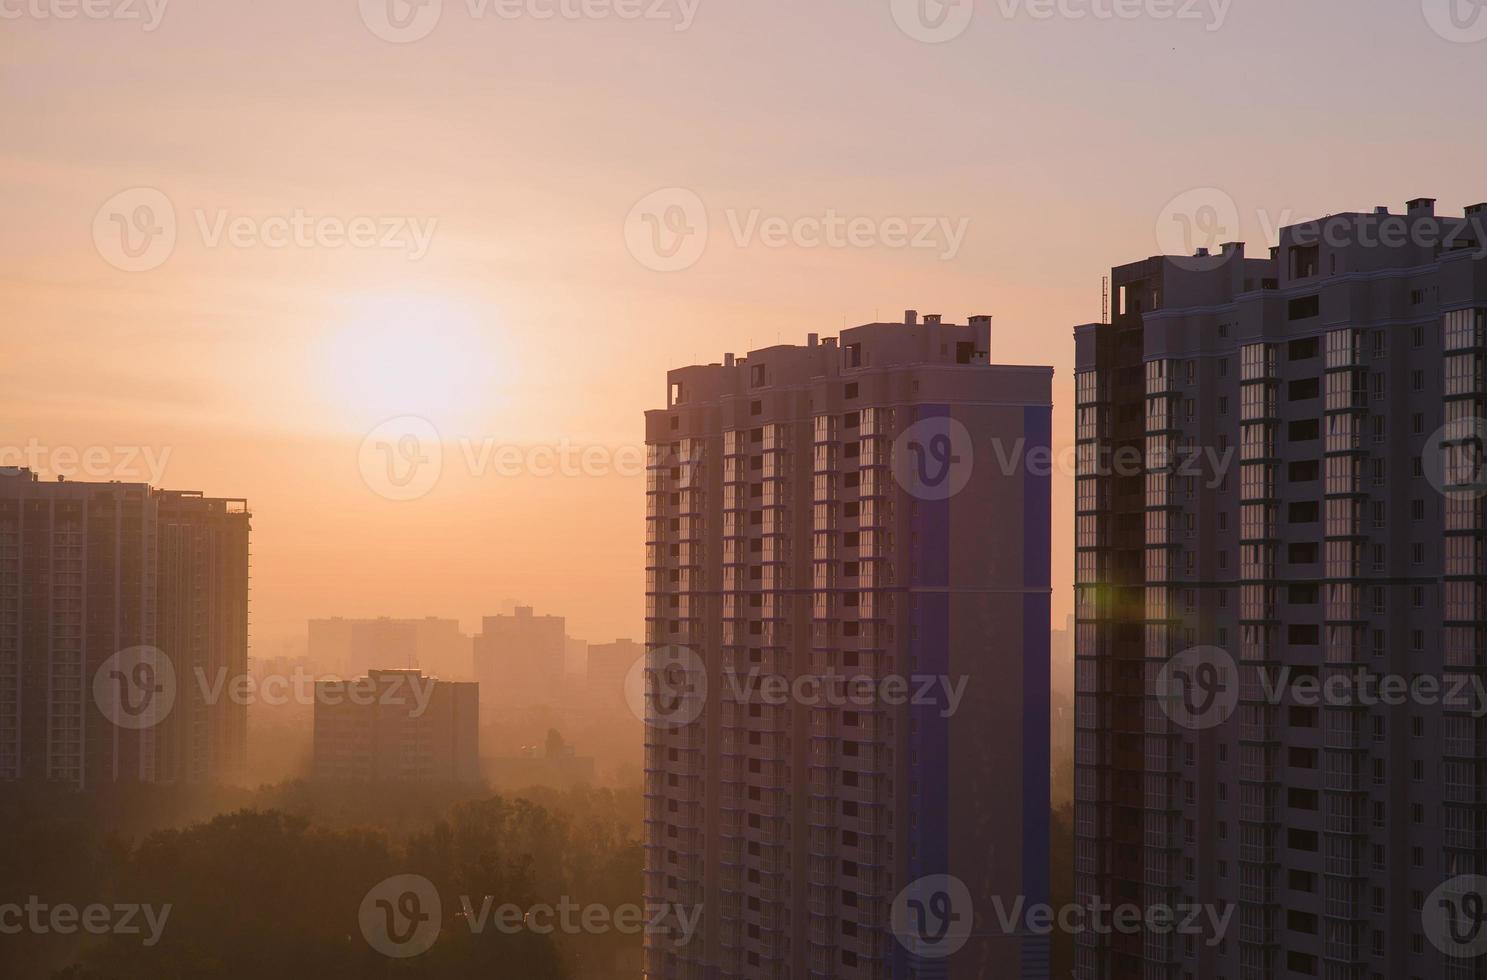 woonhuis in de vroege ochtend zonsopgang tijd. Kiev, Oekraïne foto